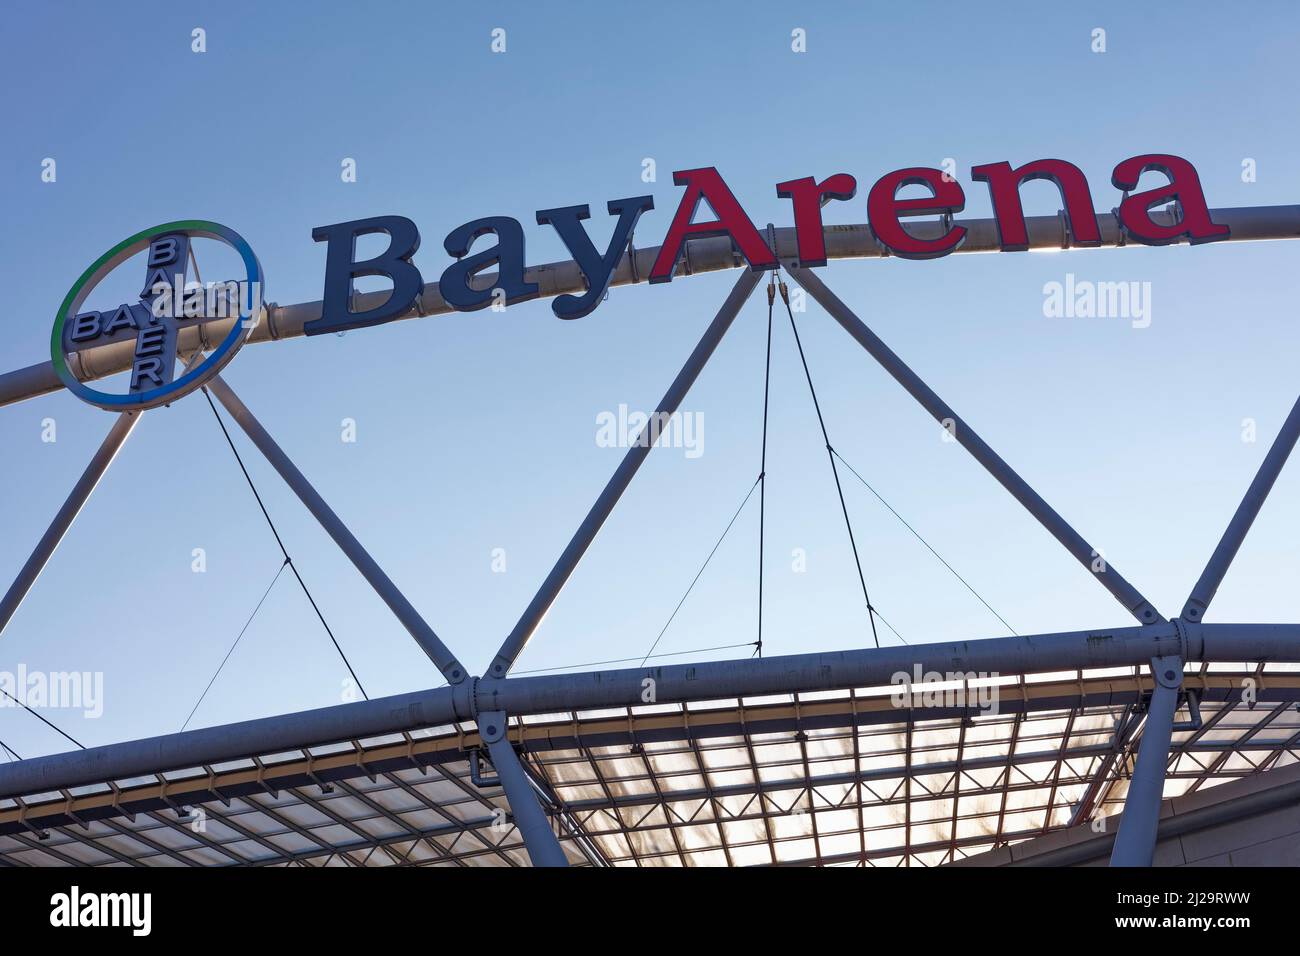 BayArena, logo on the Bayer 04 Leverkusen football stadium, North Rhine-Westphalia, Germany Stock Photo